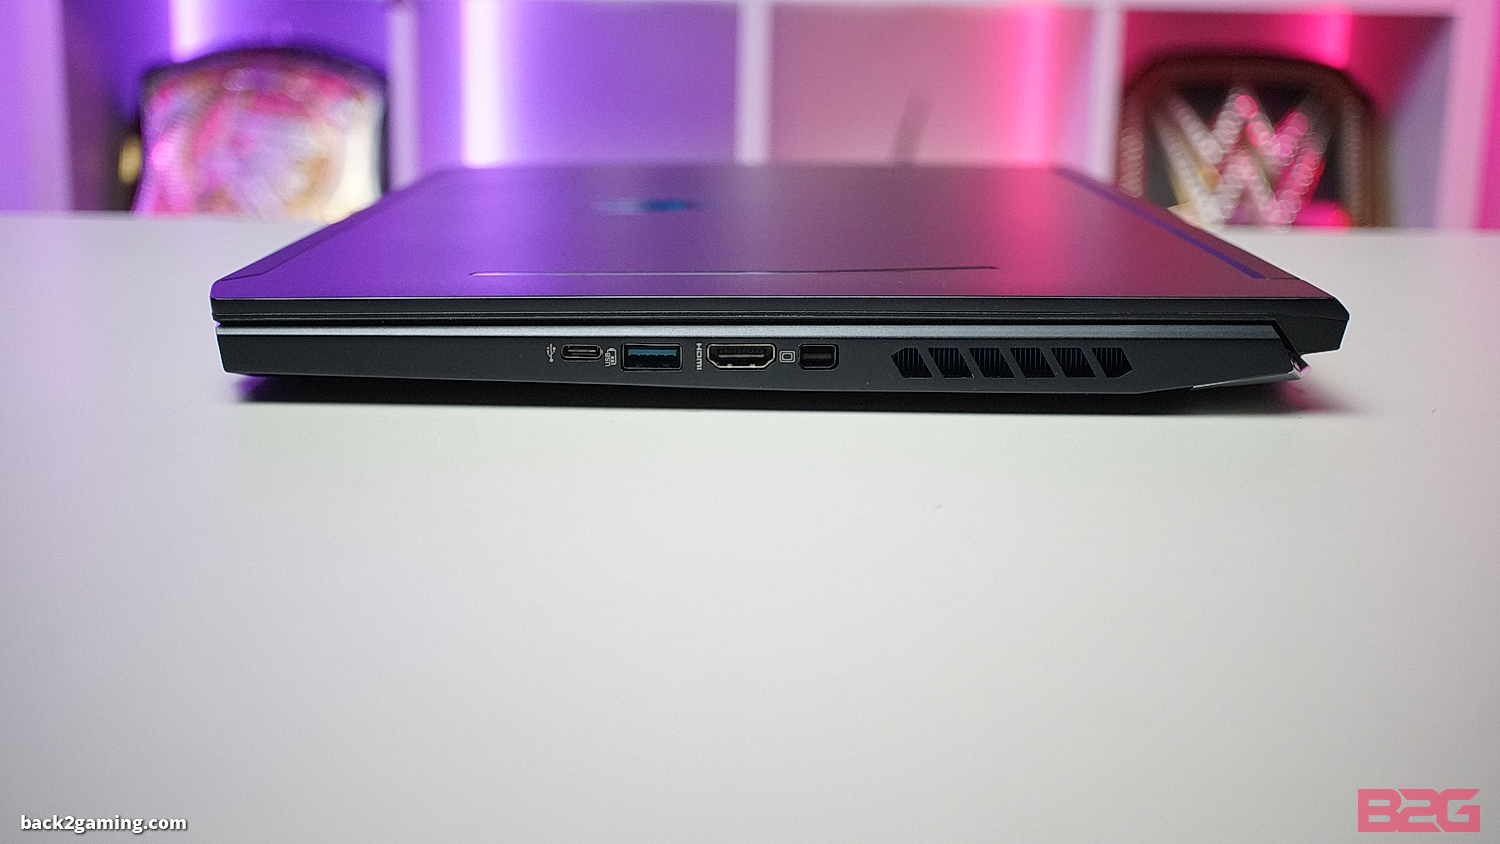 10th Gen Intel Core i5-10300H + RTX 3060 feat. Predator Helios 300 Gaming Laptop Review - returnal